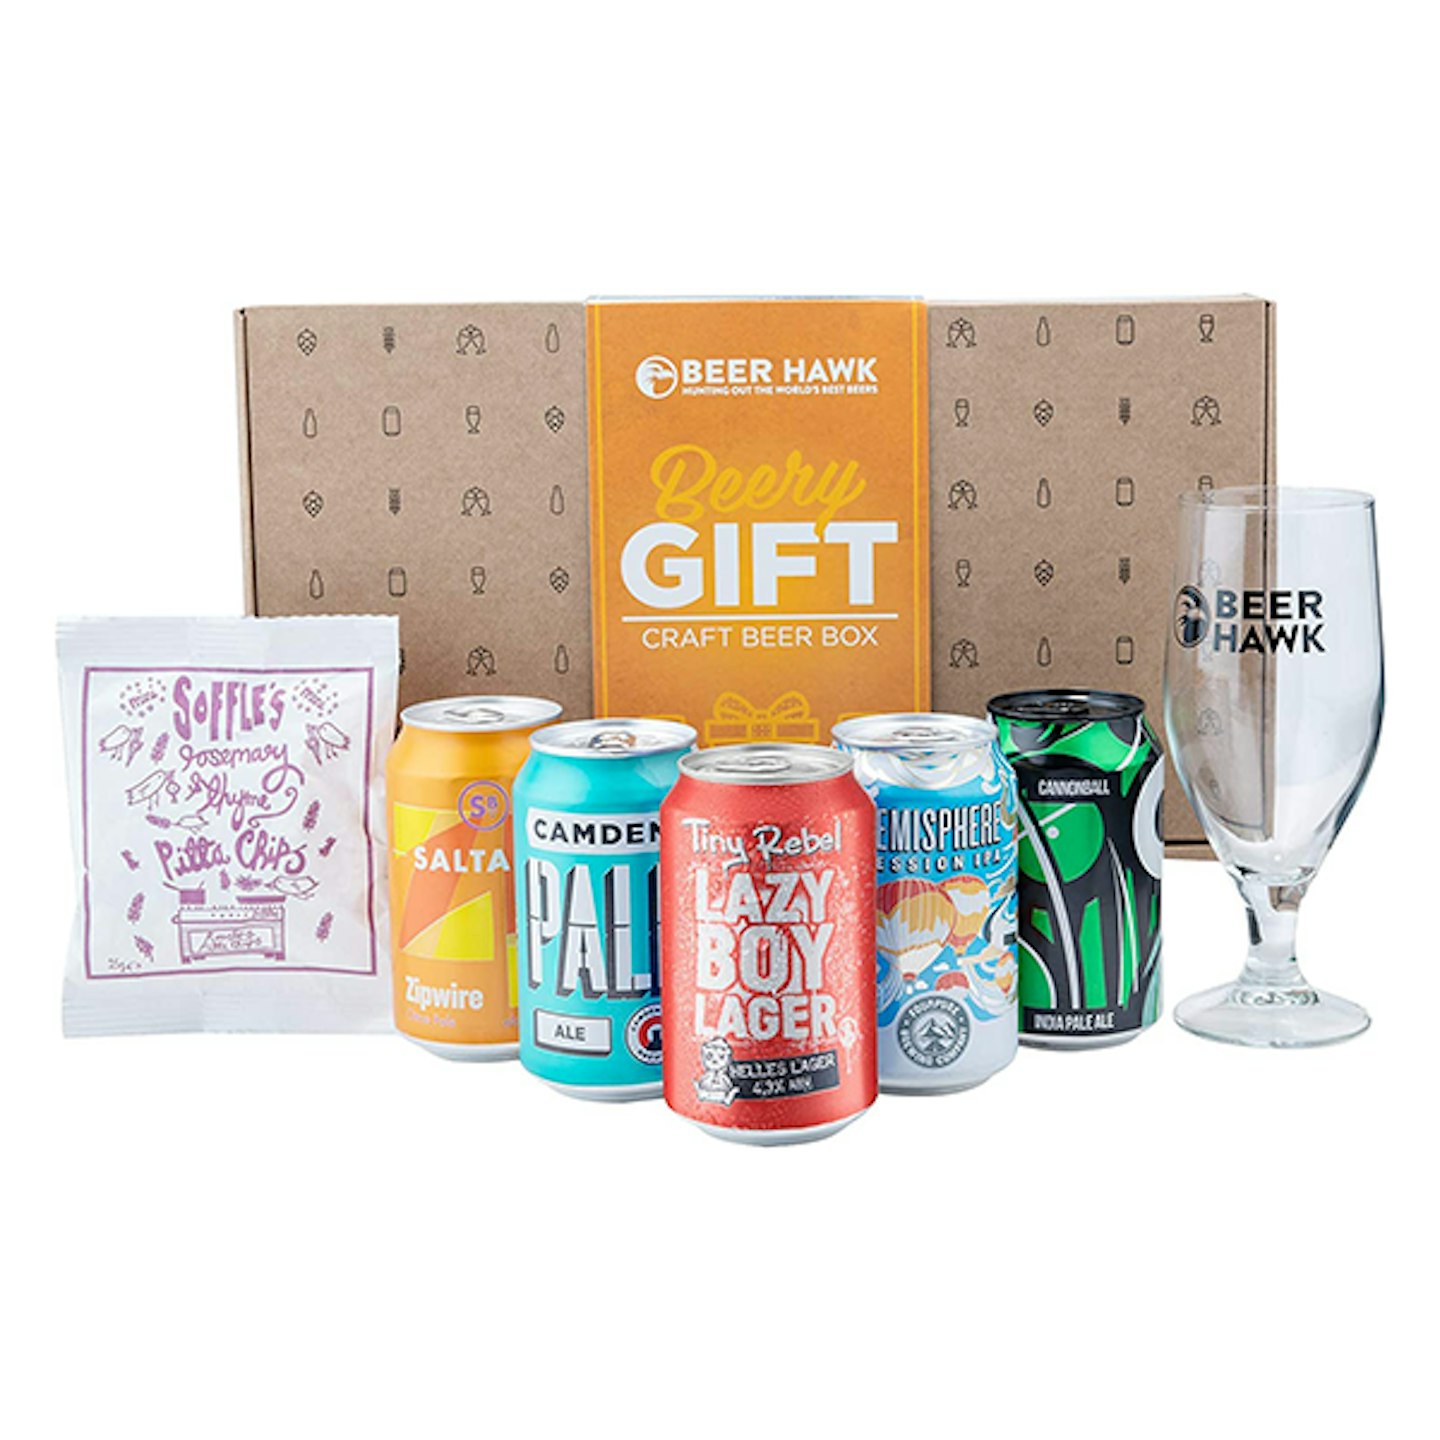 Beery Gift Hamper Selection Box by Beer Hawk